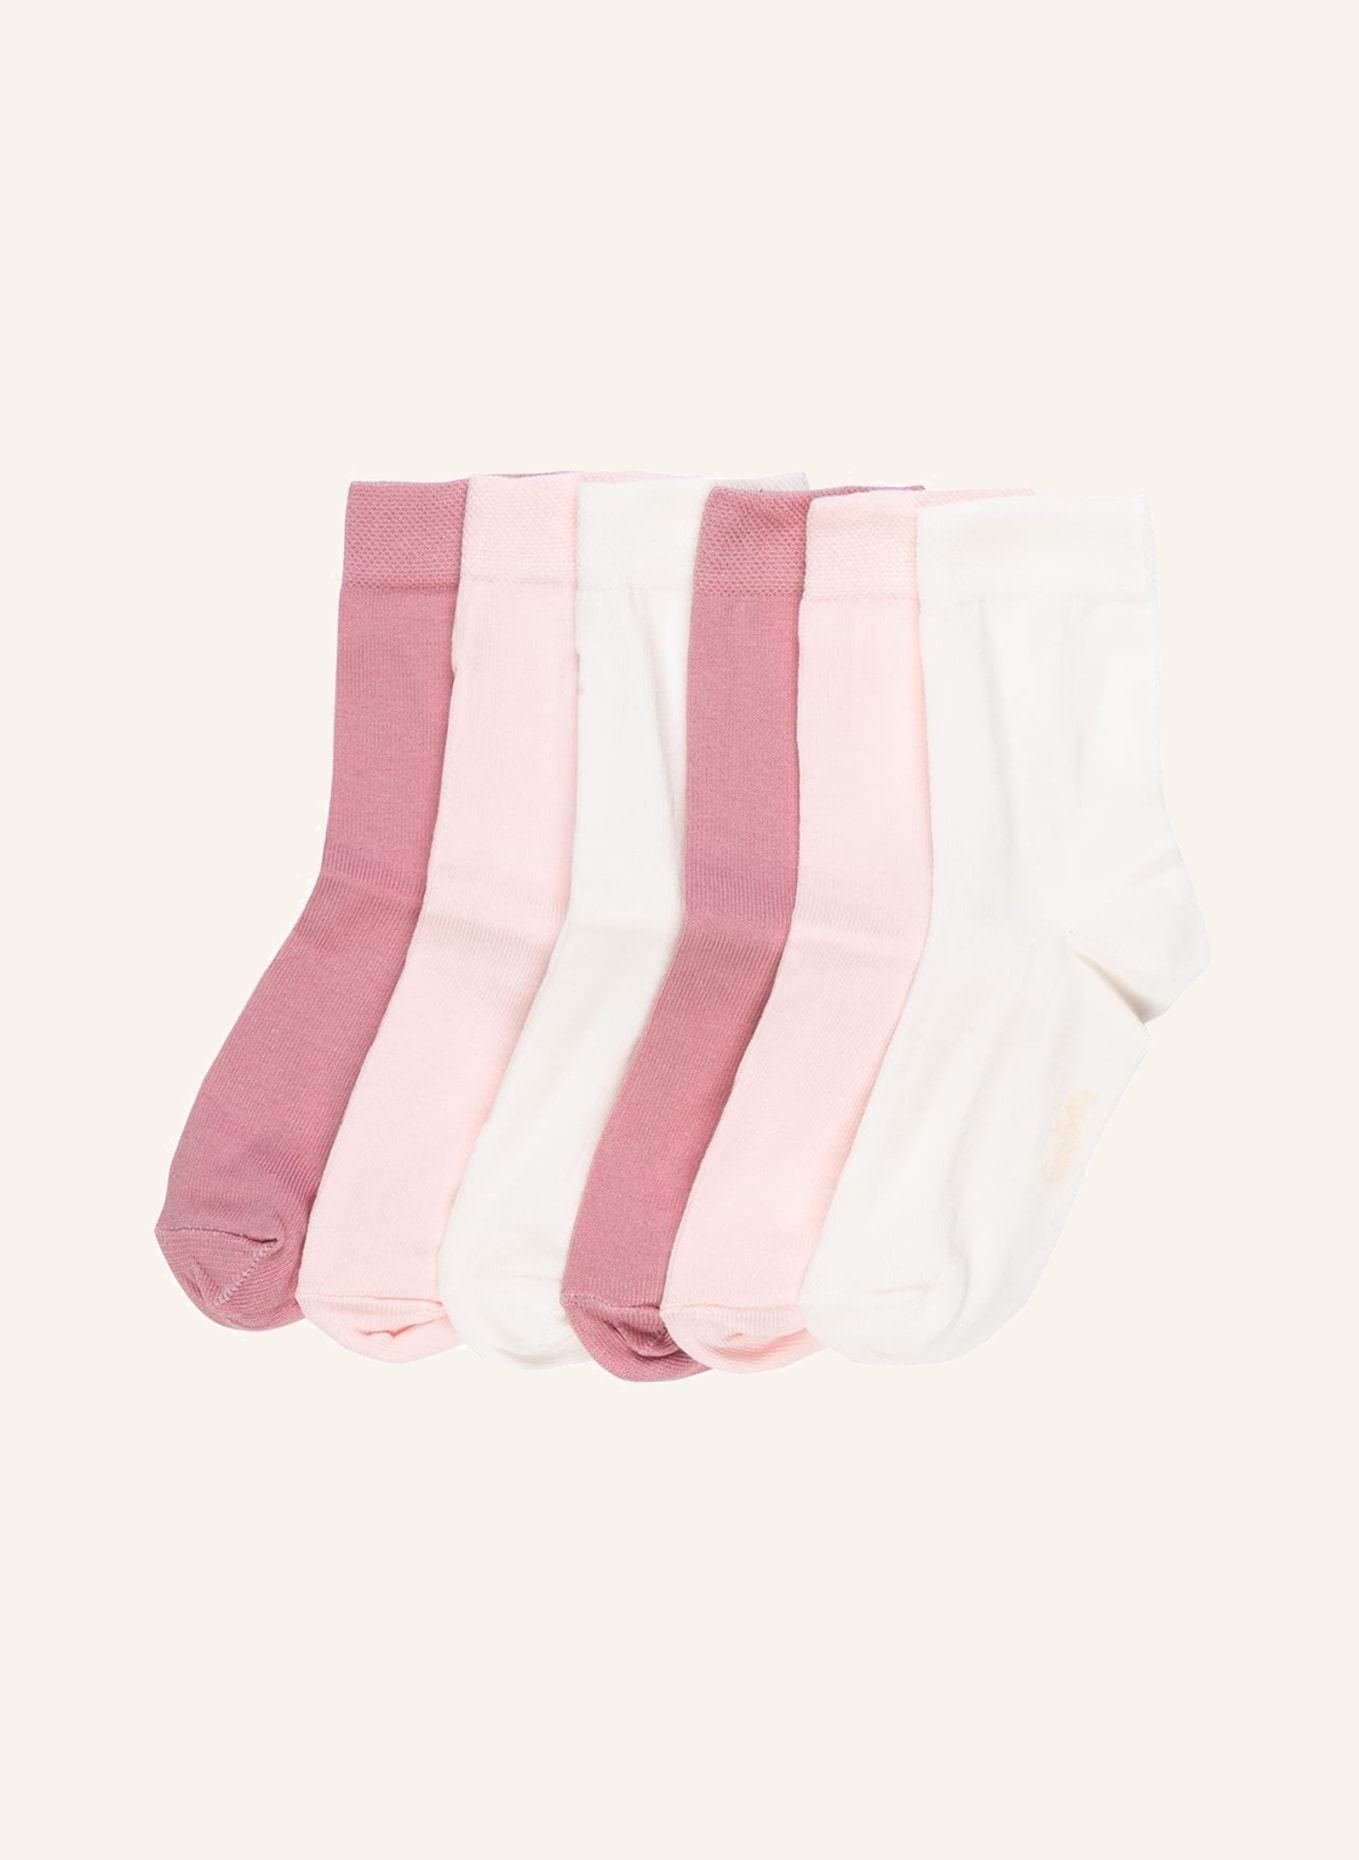 ewers COLLECTION 6er-Pack Socken, Farbe: 40 40 latte - rosé - wildrose (Bild 1)